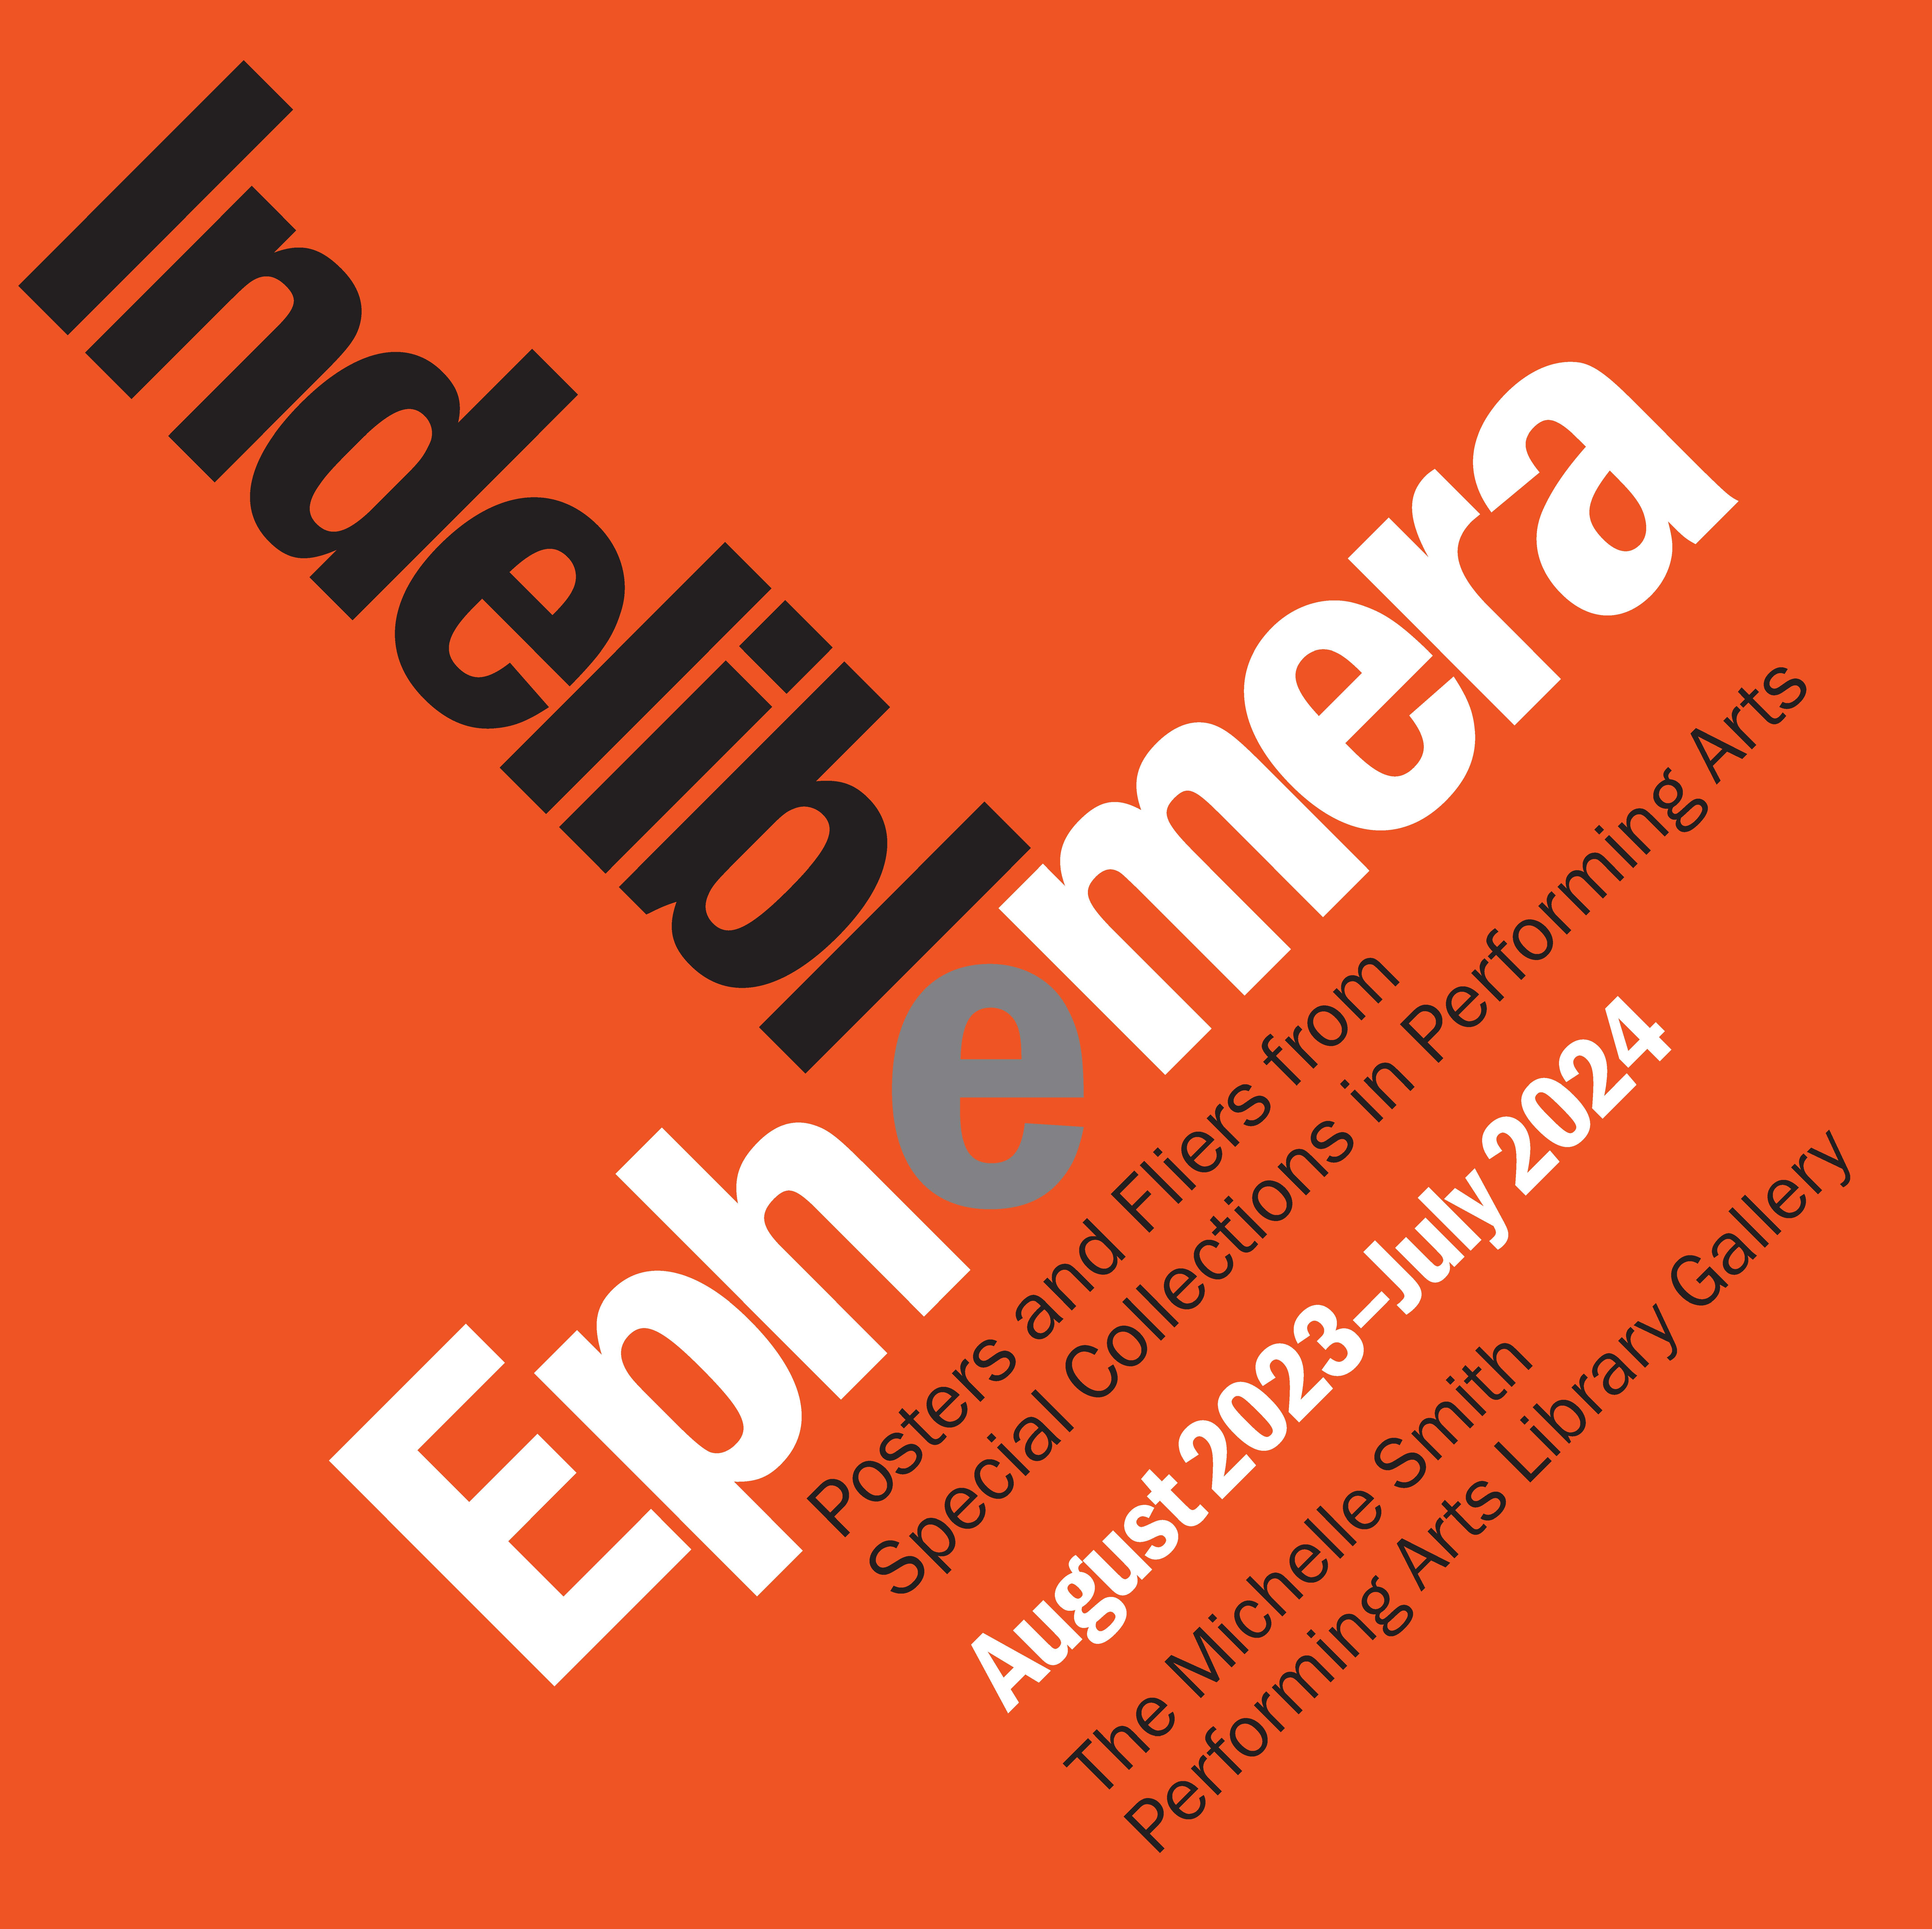 Indelible Ephemera exhibition at MSPAL gallery